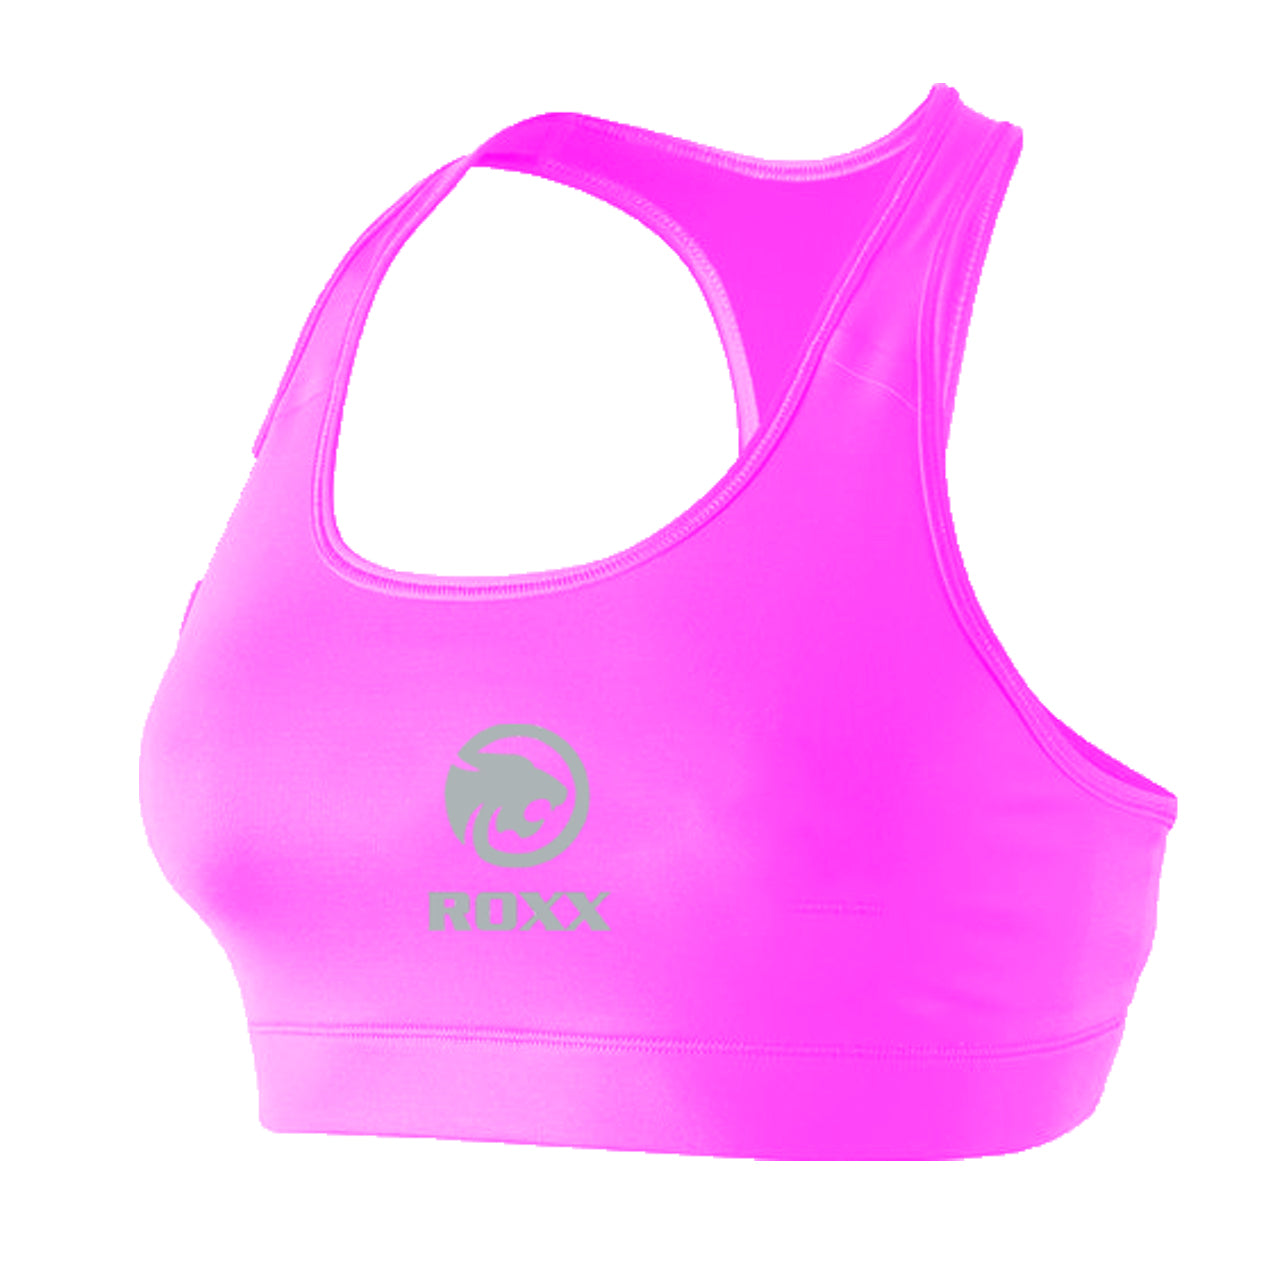 ROXX Womens Sports Bras Cyling Running Sleep Yoga Leisure Soft